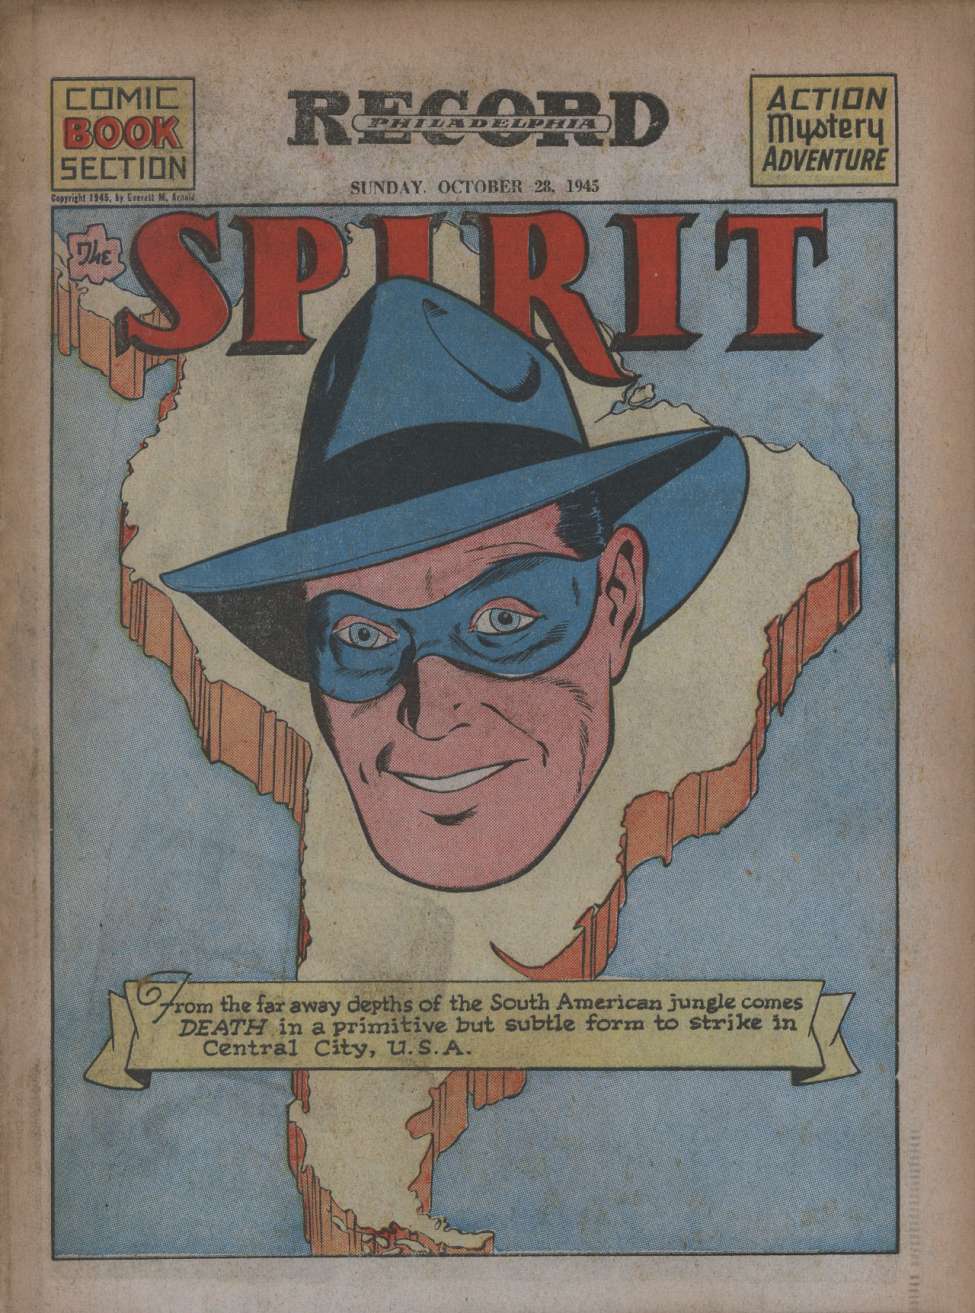 Comic Book Cover For The Spirit (1945-10-28) - Philadelphia Record